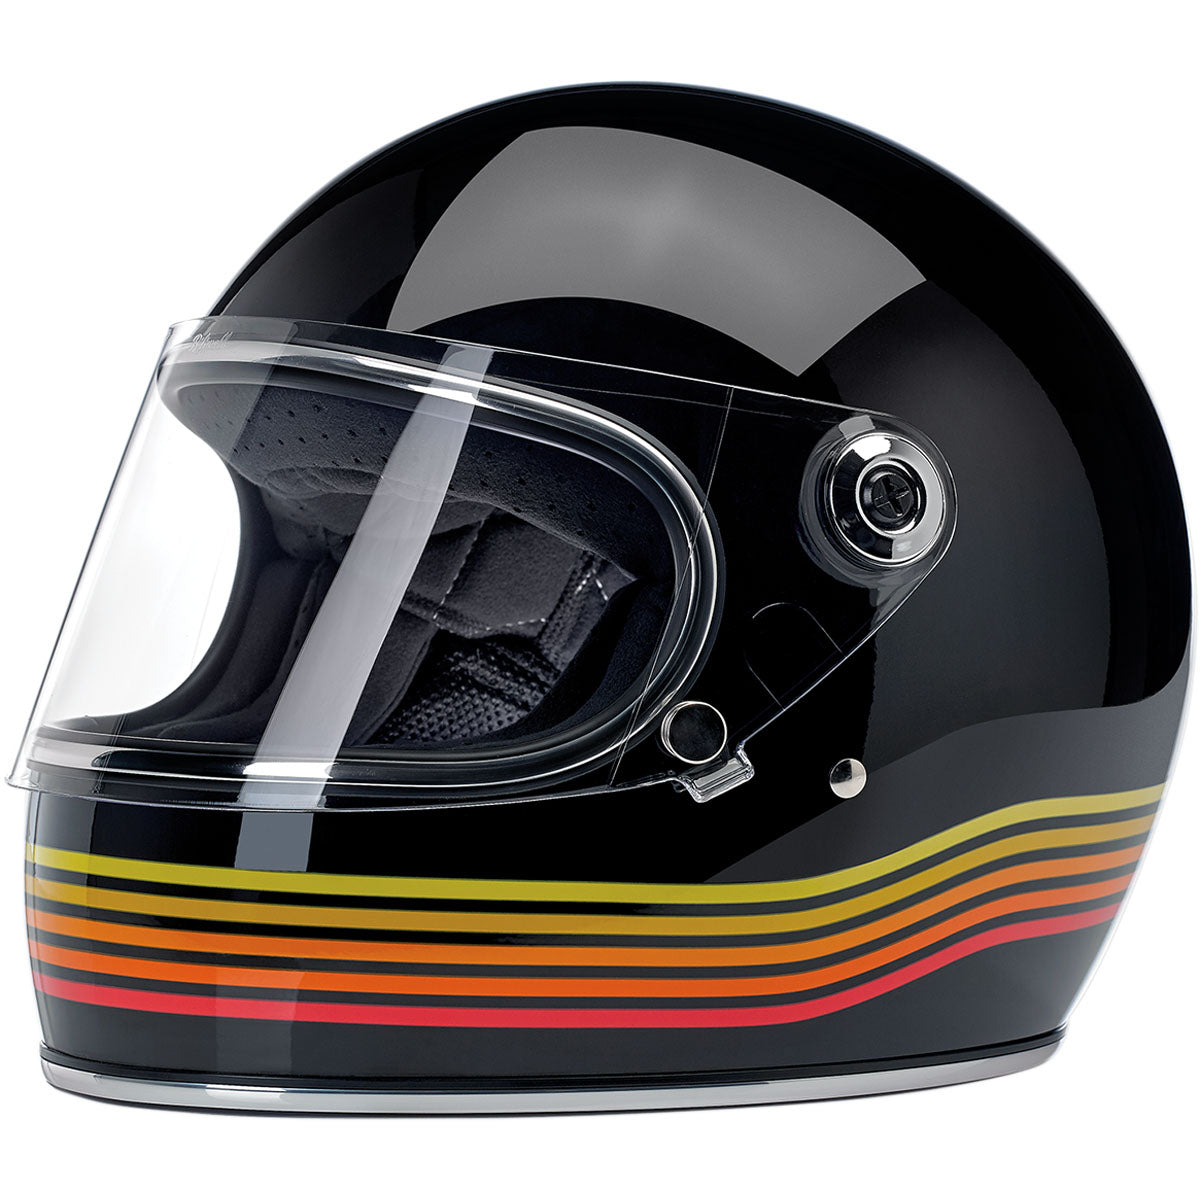 Biltwell Gringo S Helmet CLOSEOUT - Gloss Black Spectrum